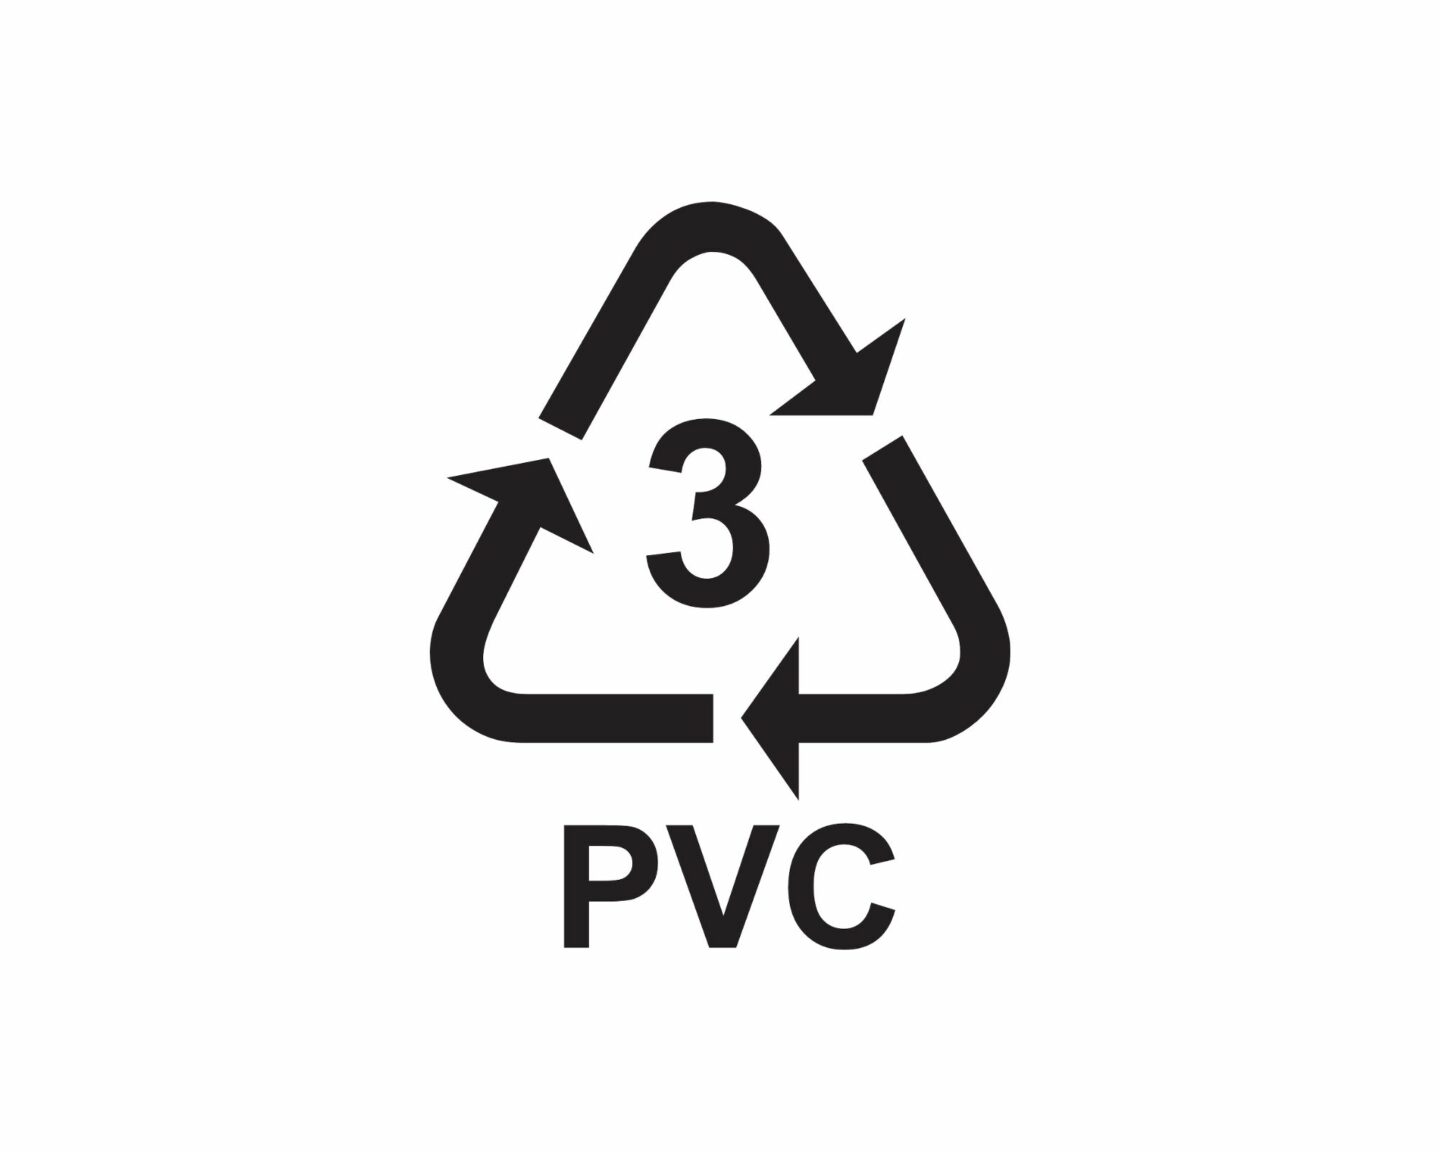 PVC - co to za plastik?